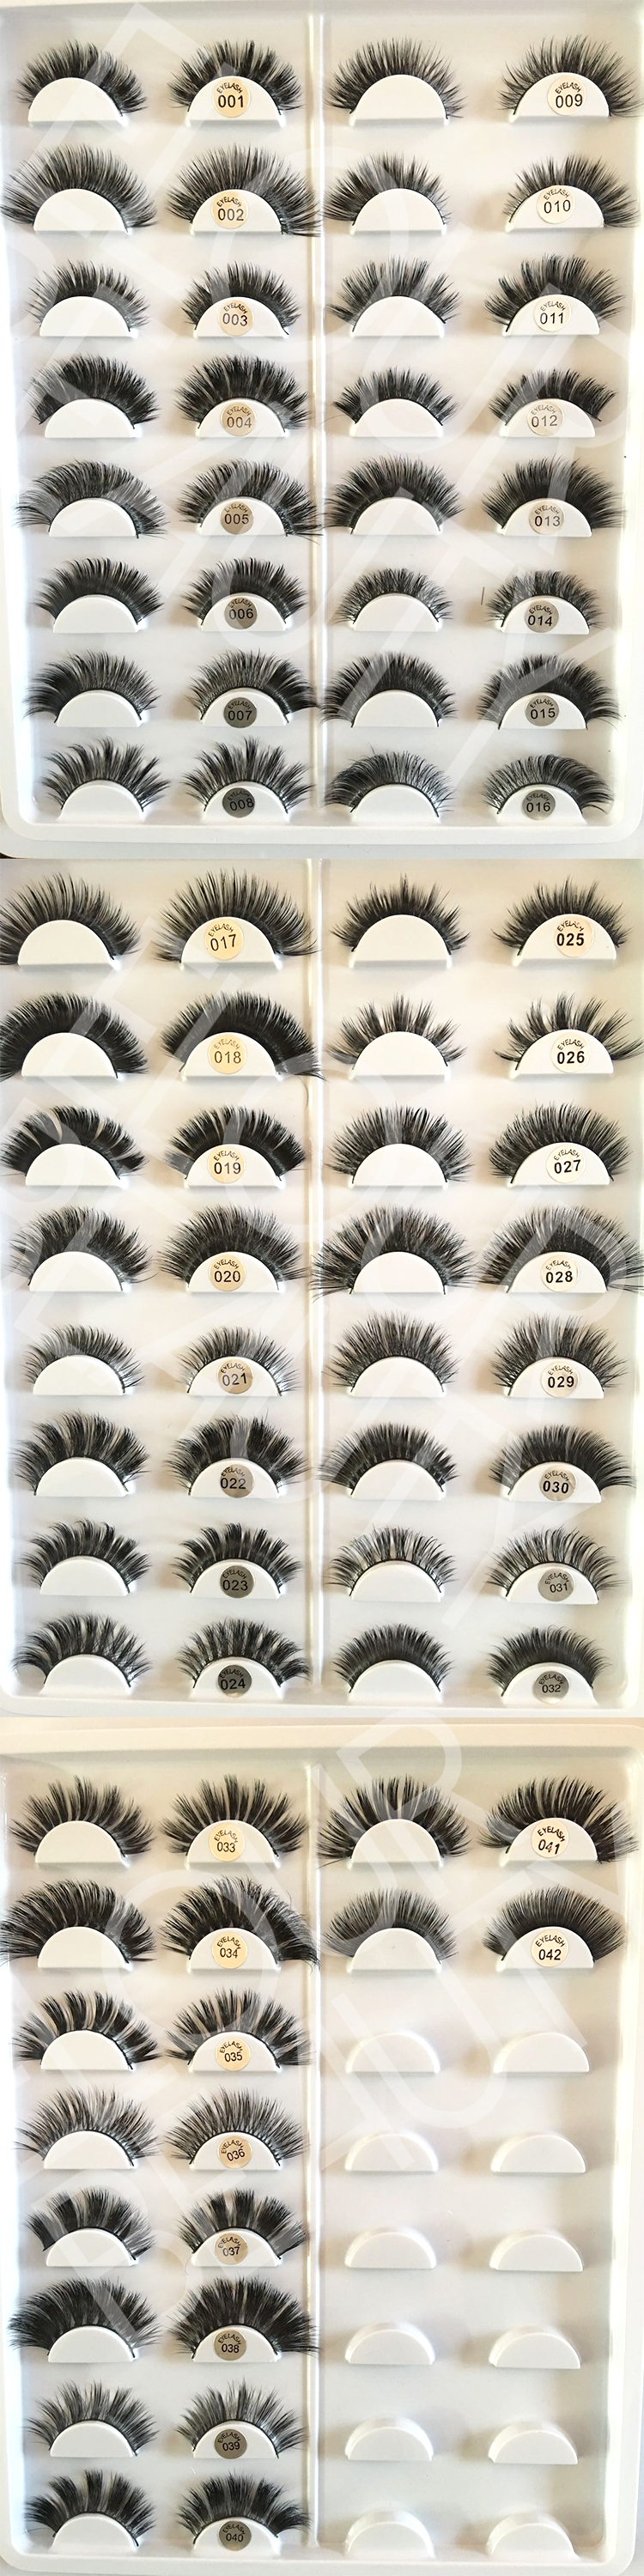 hundreds styles of mink eyelashes manufacturer.jpg